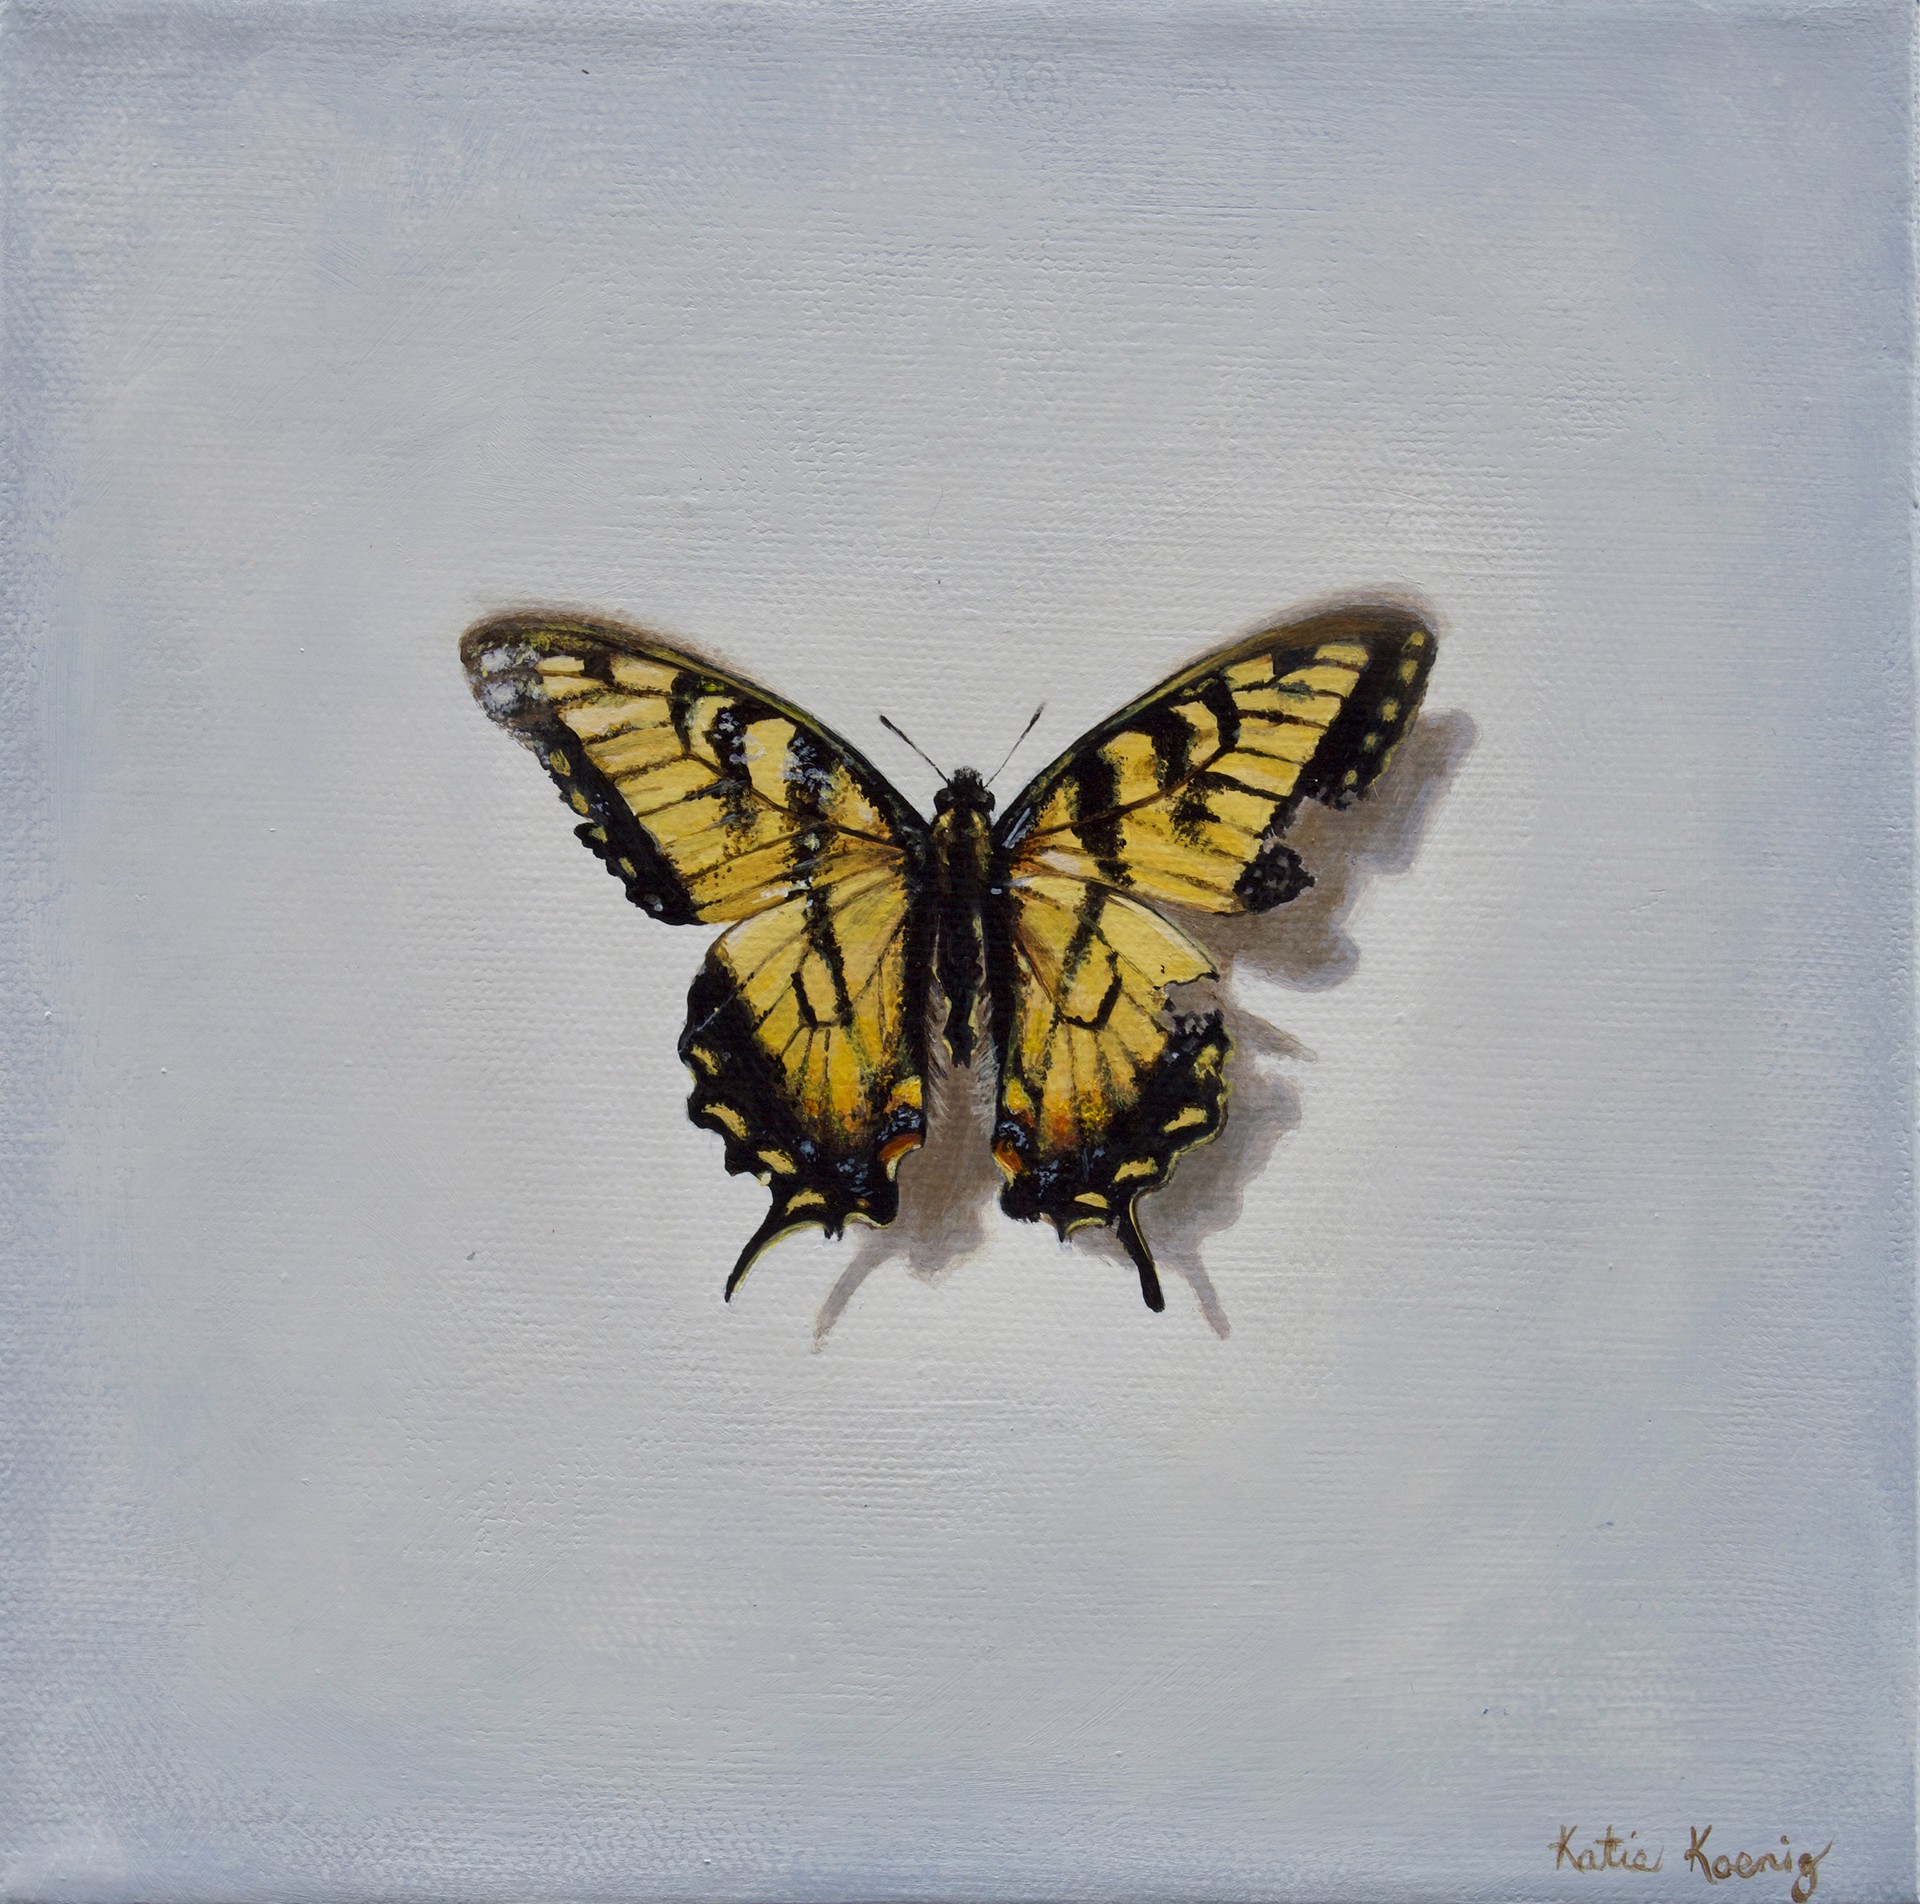 Broken Tiger Swallowtail by Katie Koenig